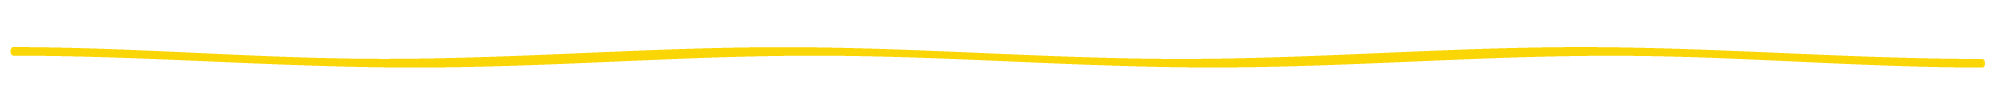 separator line yellow wave